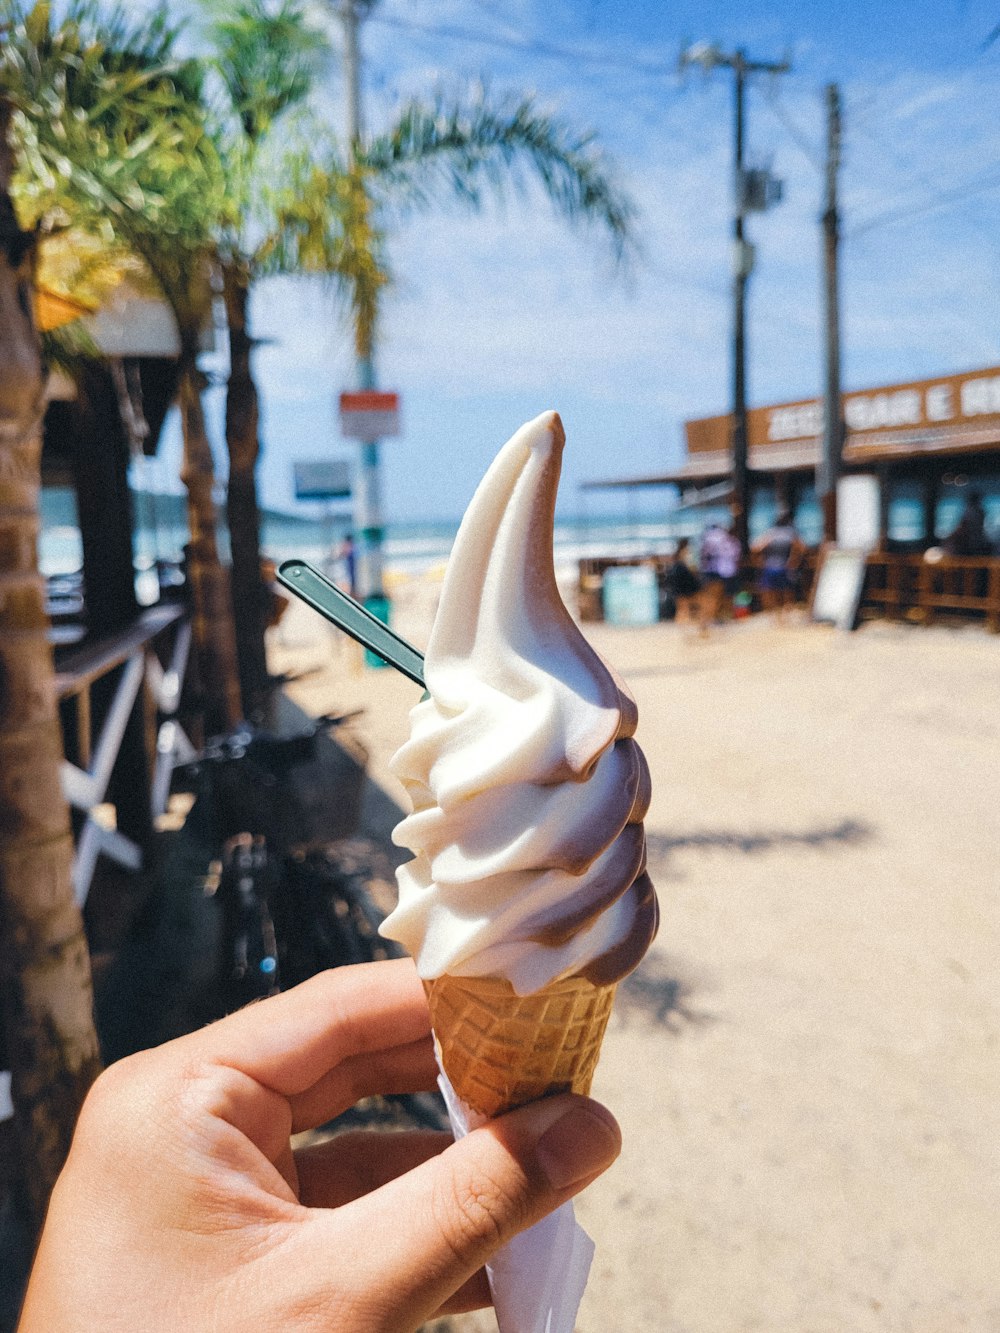 a hand holding an ice cream cone on a beach